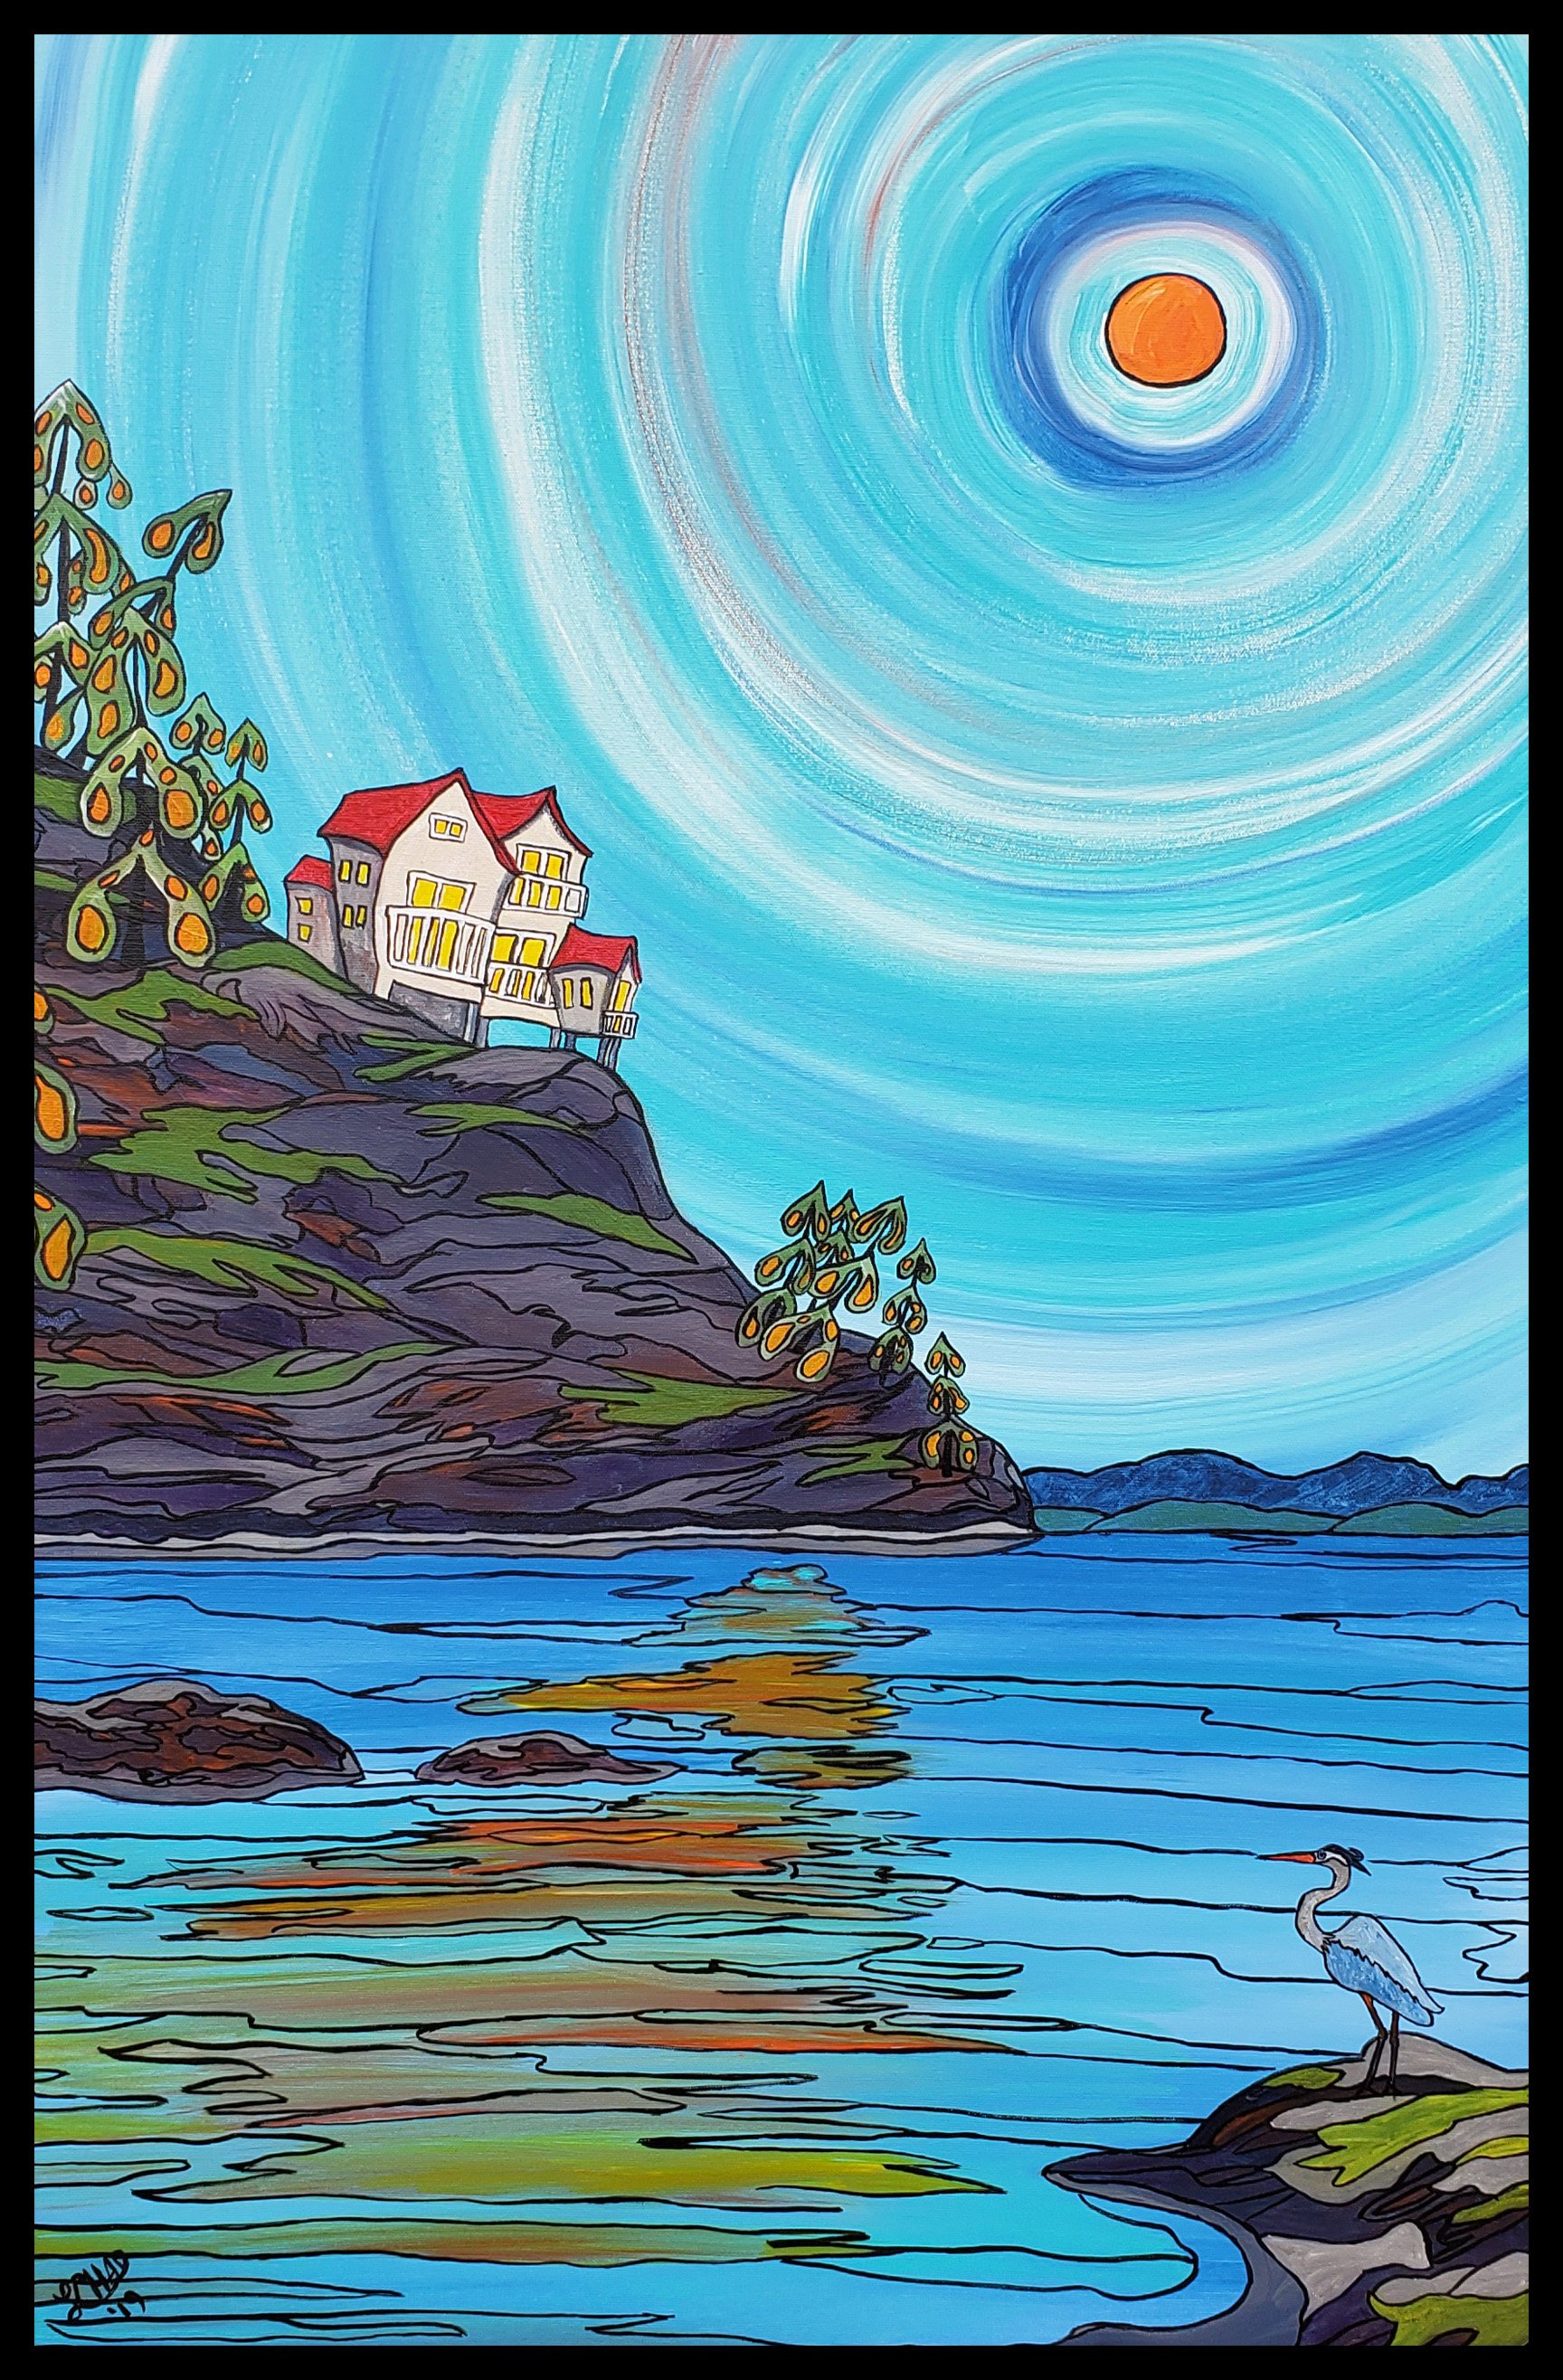 2019-15 "Living Seaside
Image: 24" x 36"
Framed: 27" x 39"
Acrylic on professional canvas
$1600.00
